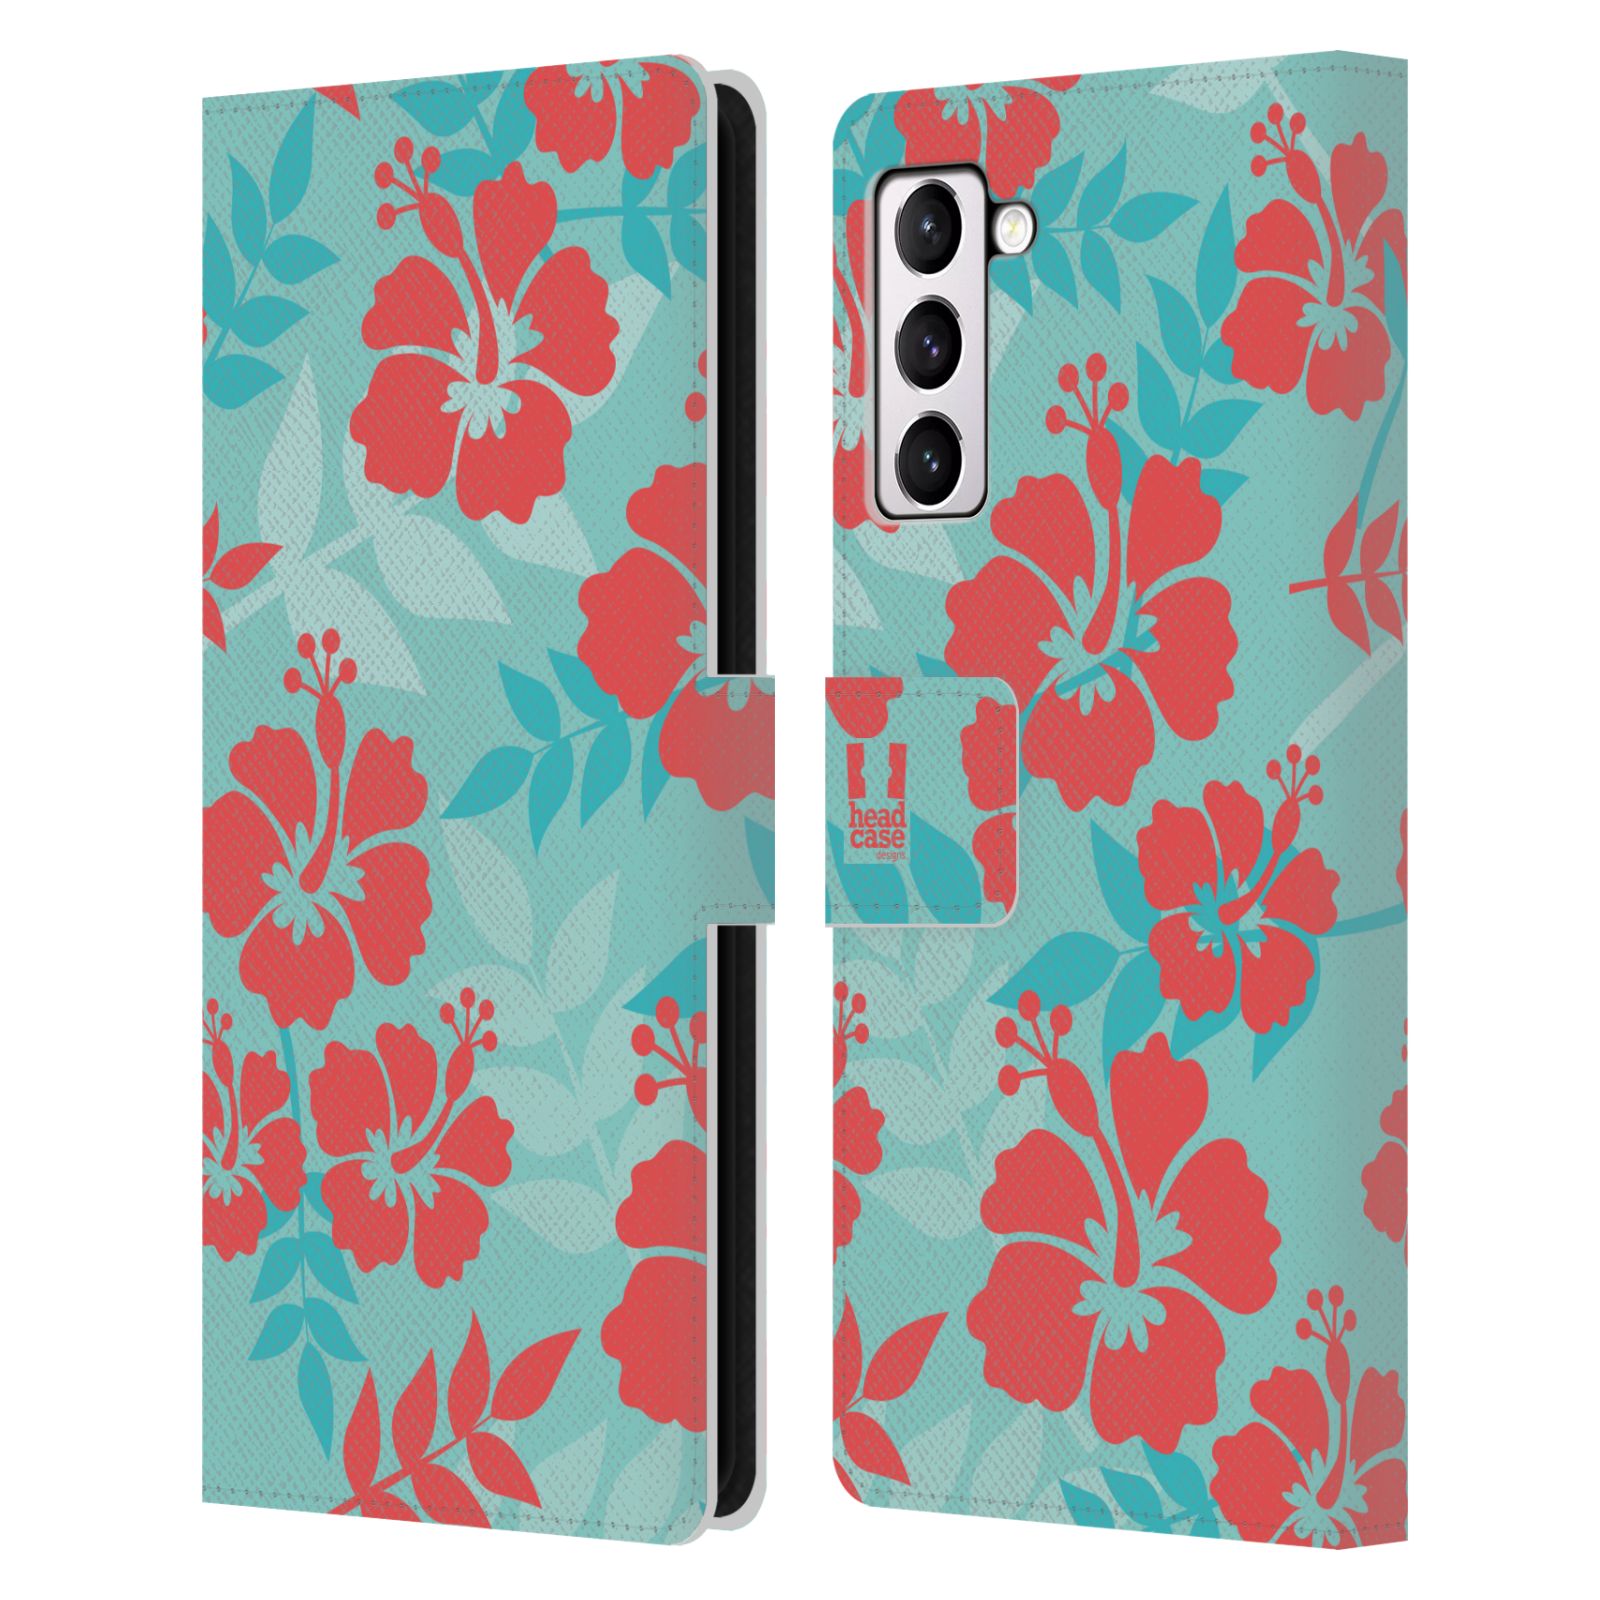 Pouzdro HEAD CASE na mobil Samsung Galaxy S21+ 5G / S21 PLUS 5G Havajský vzor Ibišek květ modrá a růžová